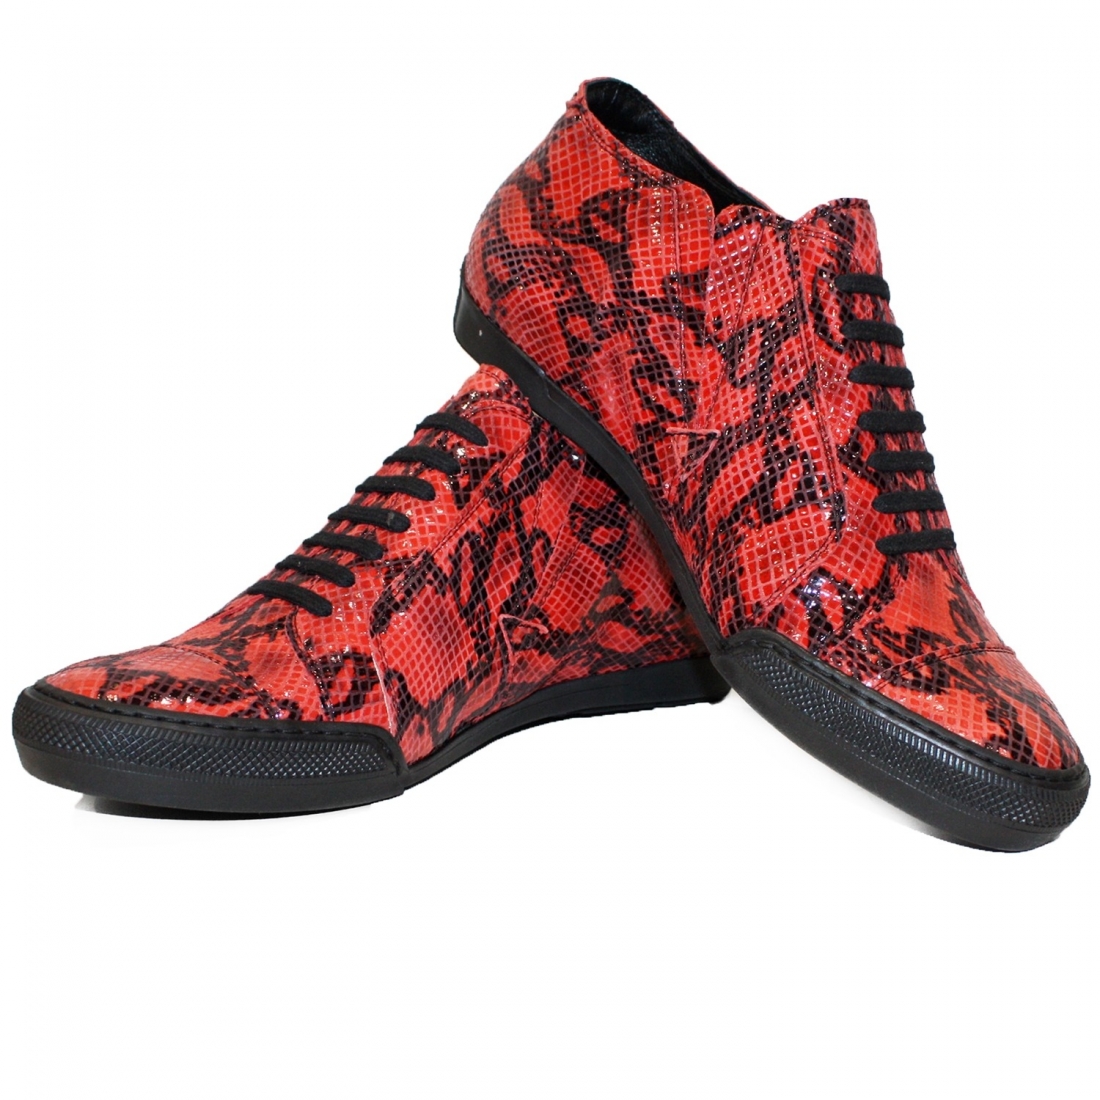 Modello Luherro - Zapatos Casuales - Handmade Colorful Italian Leather Shoes